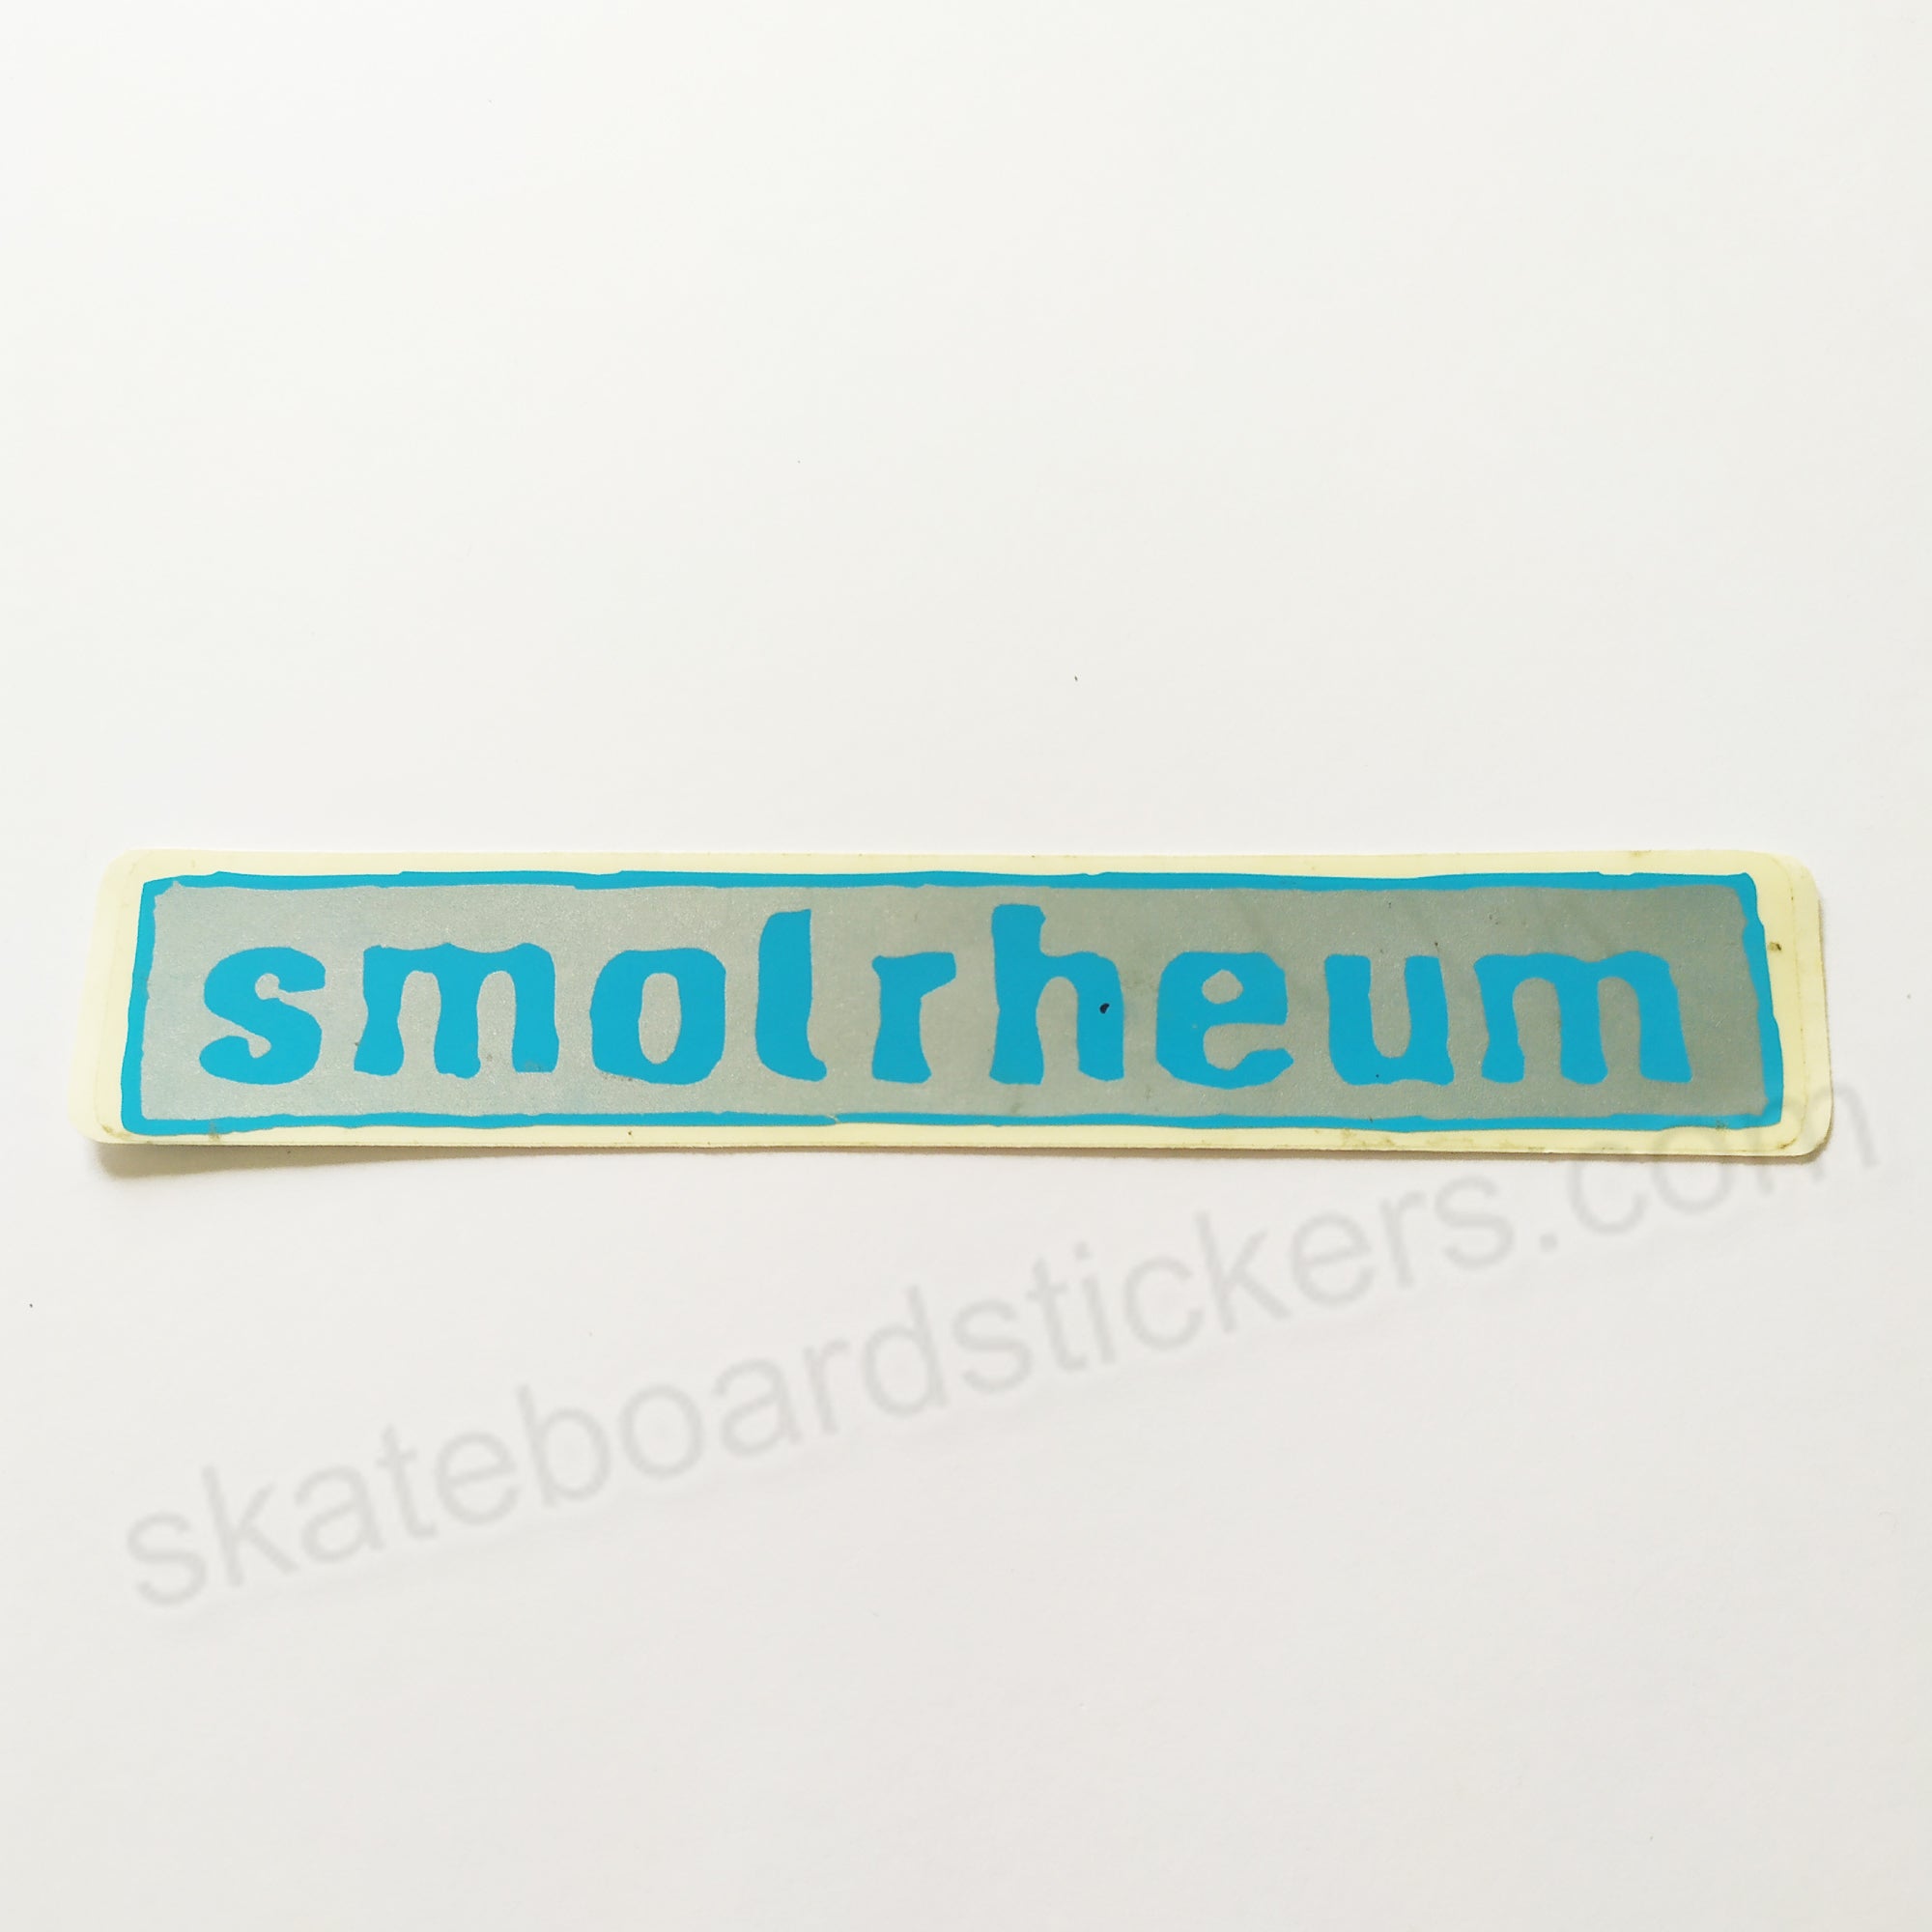 Smallroom Skateboards Old School Skateboard Sticker - "Smolrheum" - SkateboardStickers.com